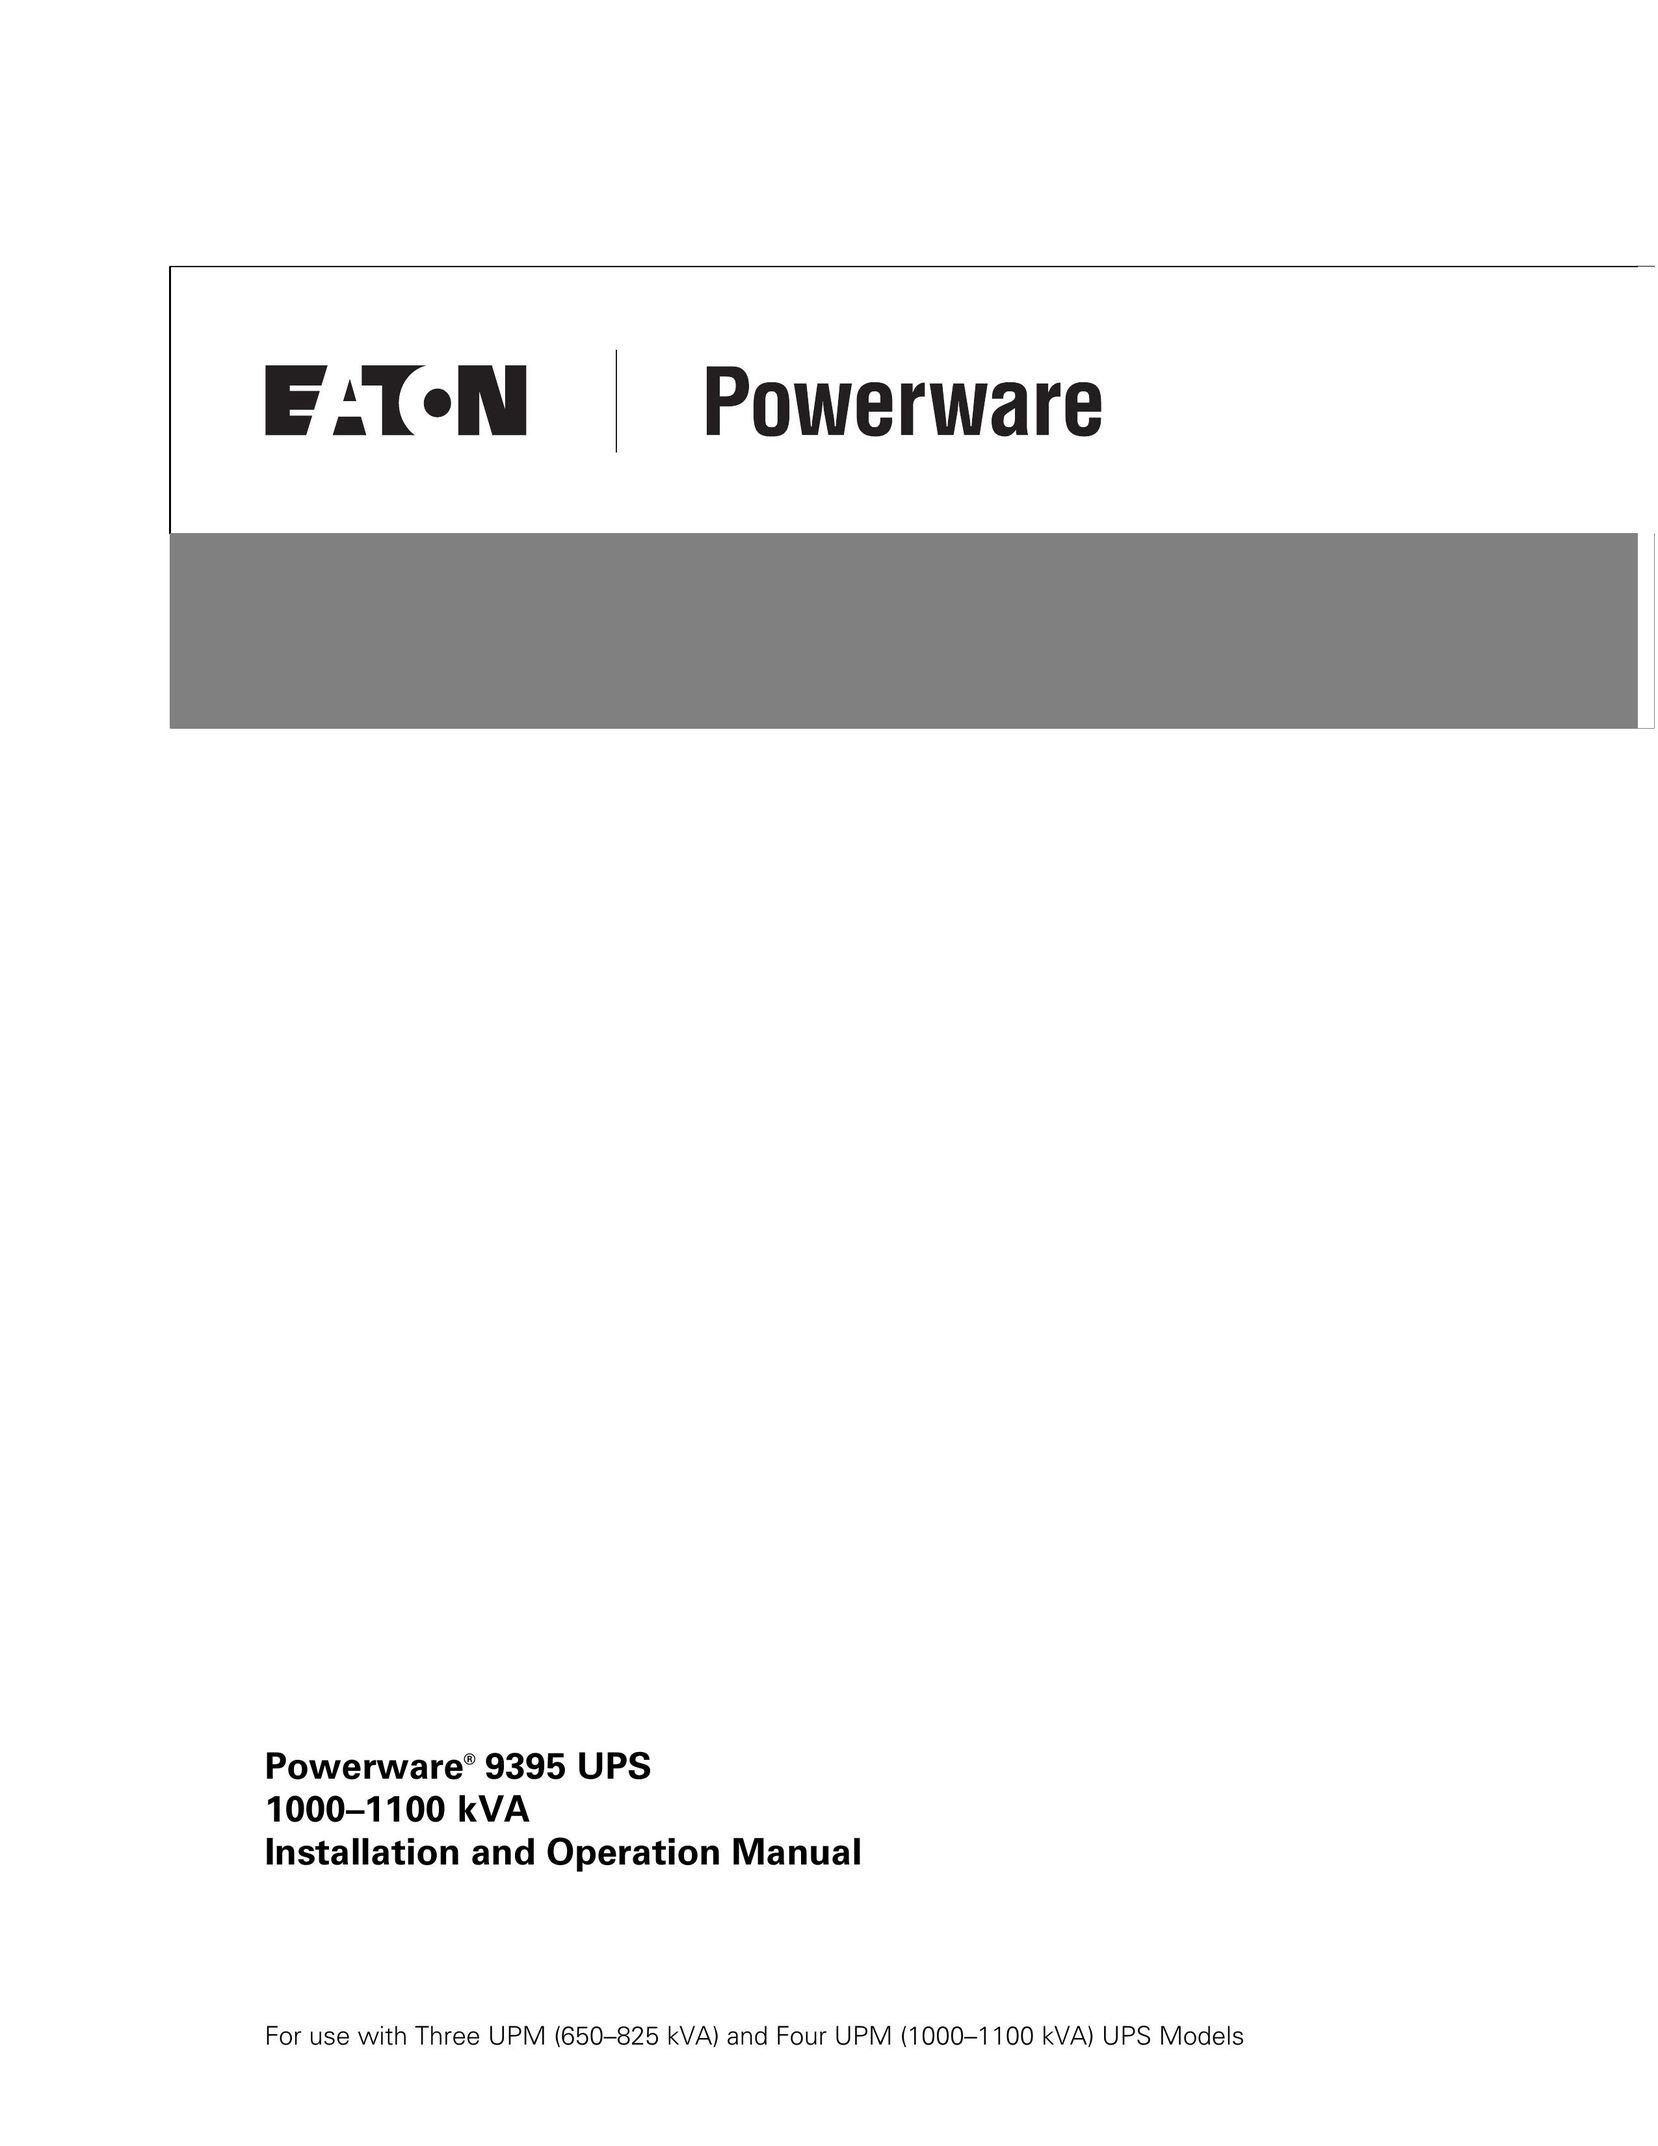 Powerware 10001100 kVA Power Supply User Manual